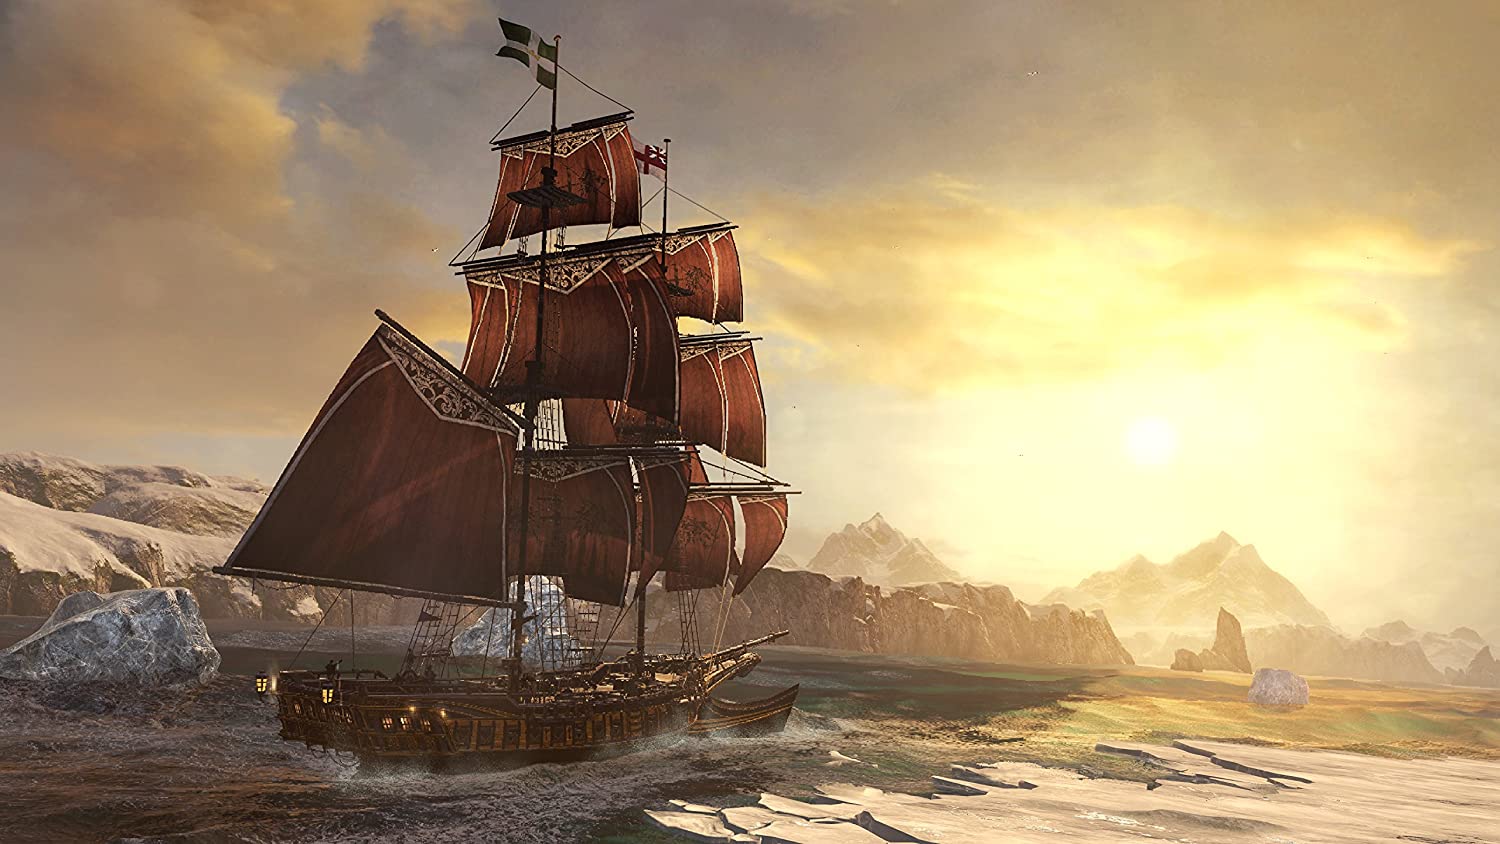 Скриншоты Assassin's Creed: Rogue Remastered [Изгой][Xbox One/Series X, русская версия] интернет-магазин Омегагейм